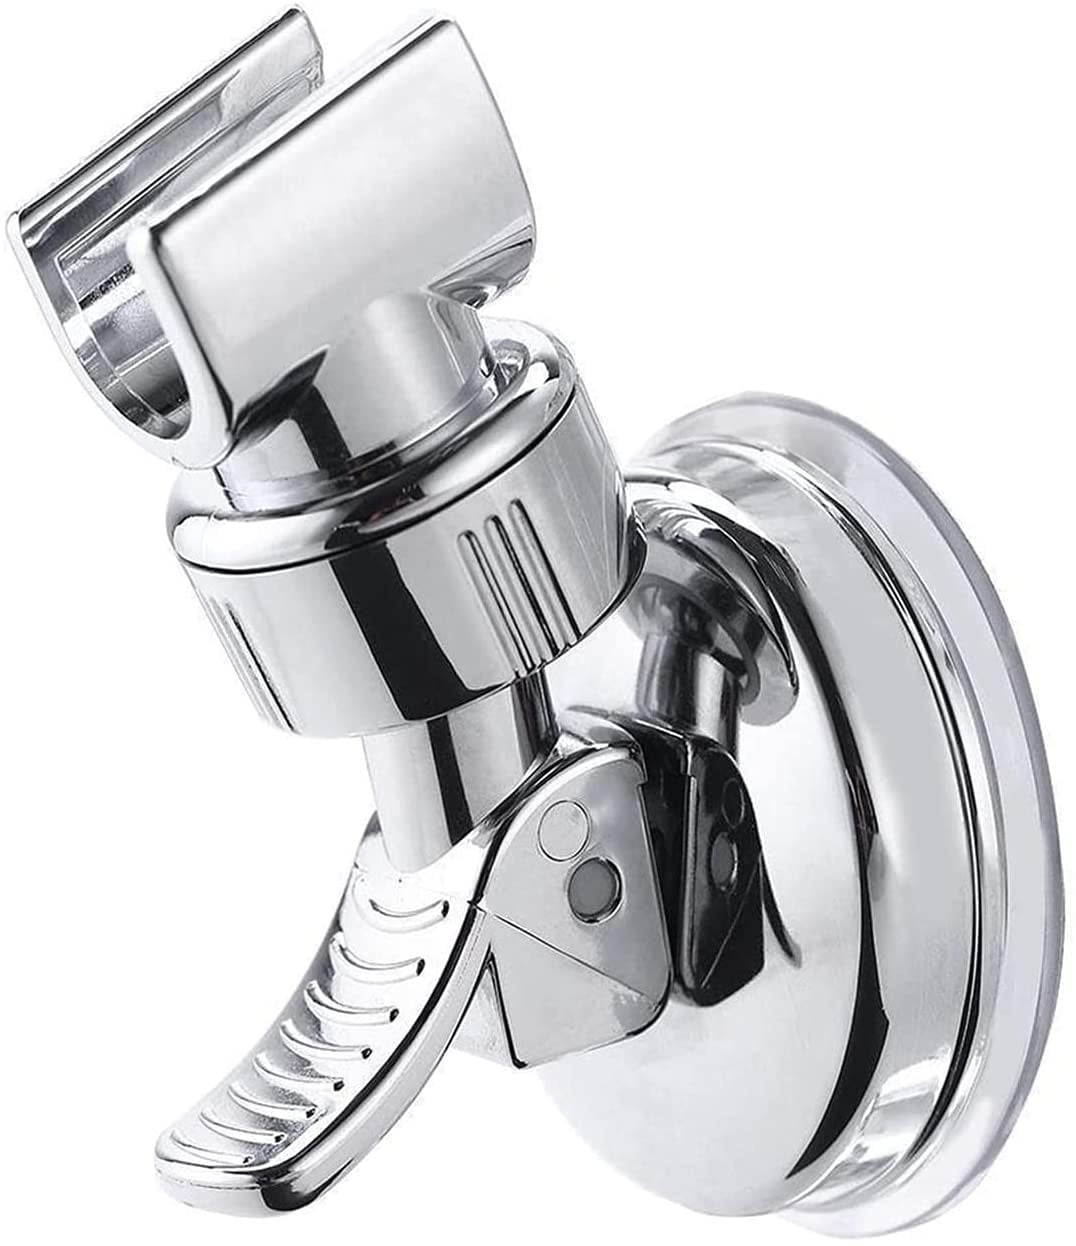 Shower Head Holder Reusable Durable Suction Cup Shower Bracket Mount Bathroom 